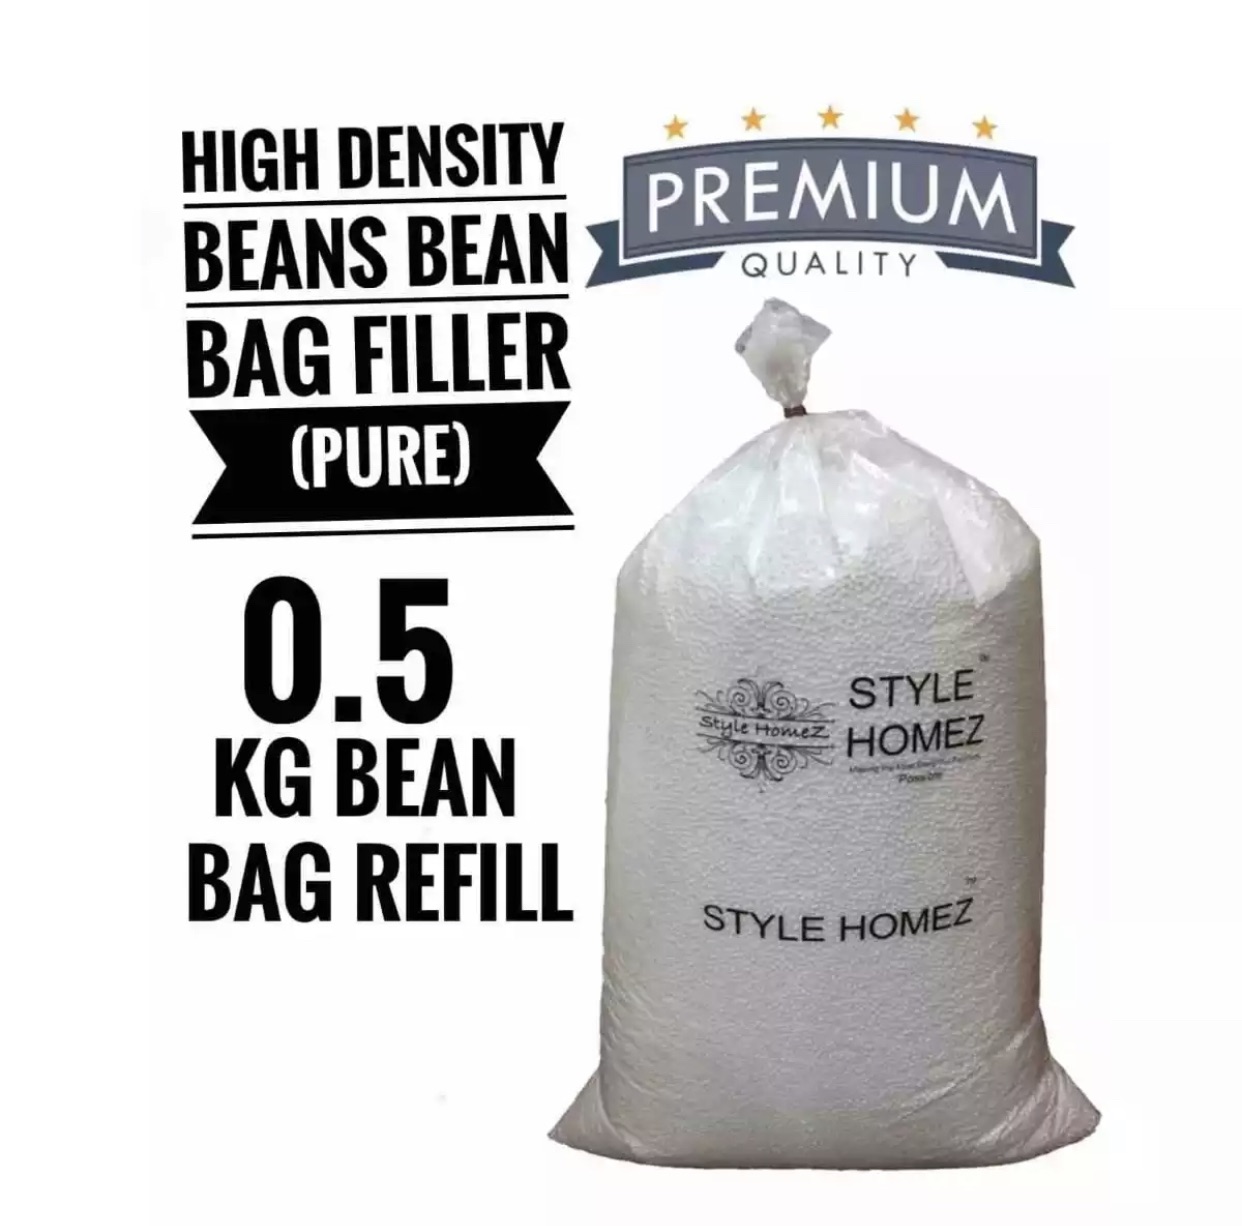 Premium Quality 0.5 Kg Bean Bag Refill/Filler